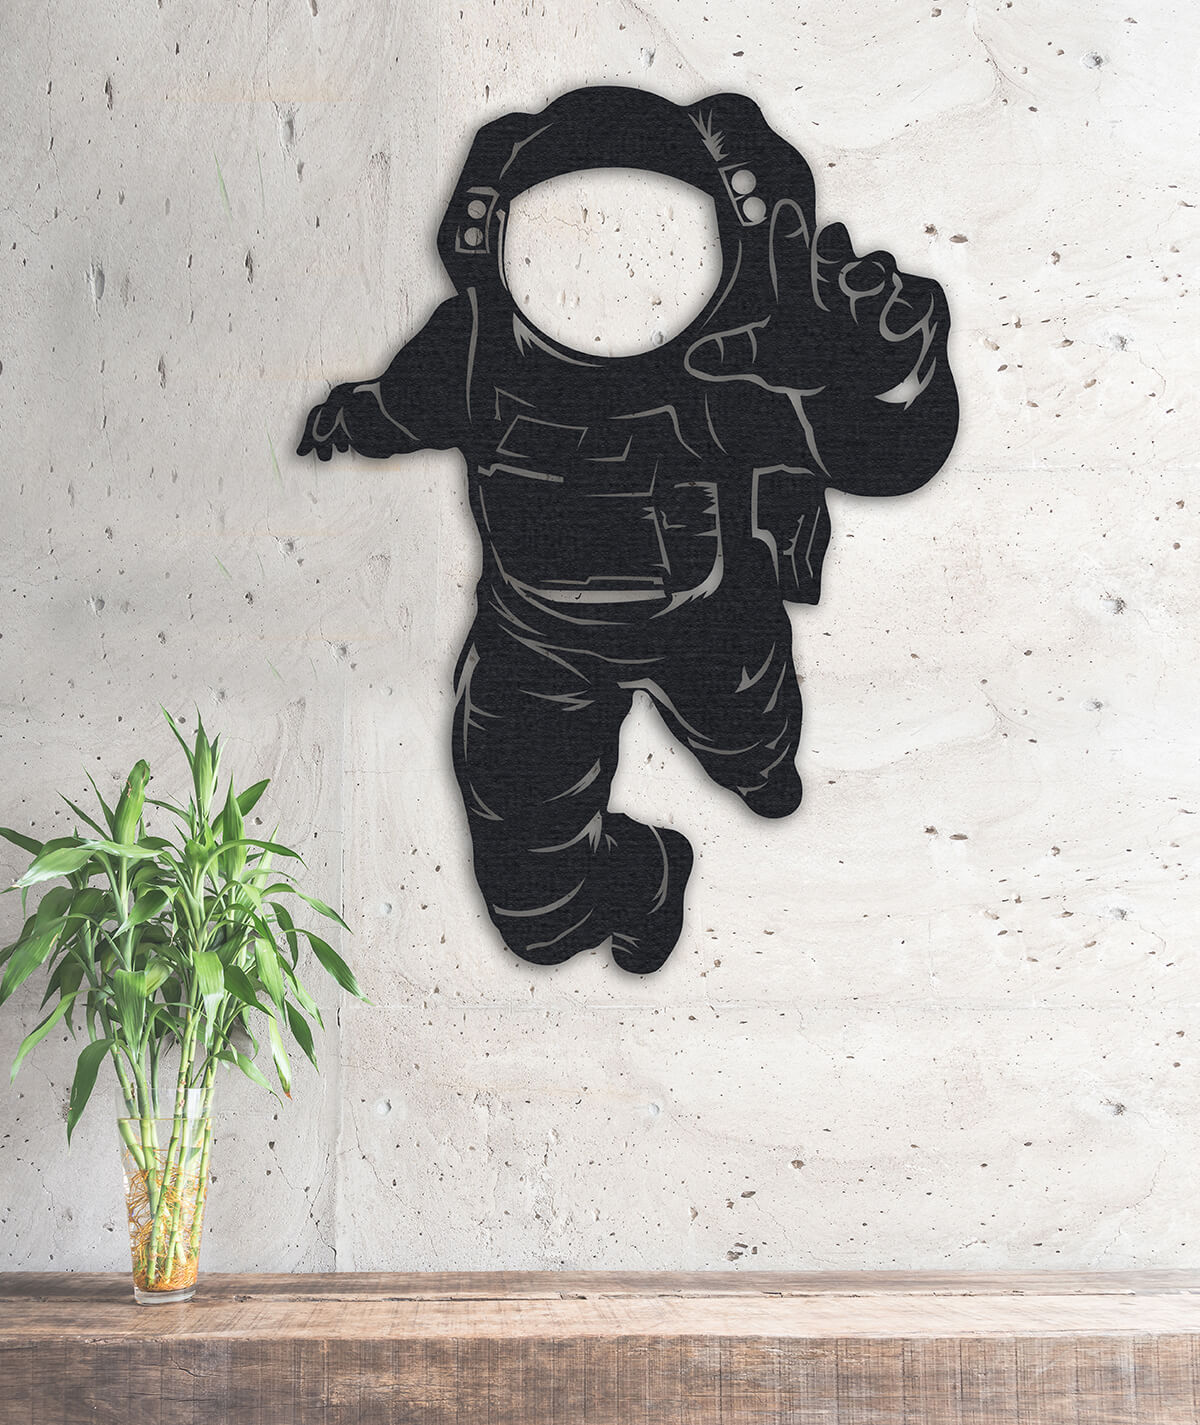 Astronaut Metal Wall Art Astronaut Wall Decor Black Metal Space Wall Poster Hencely